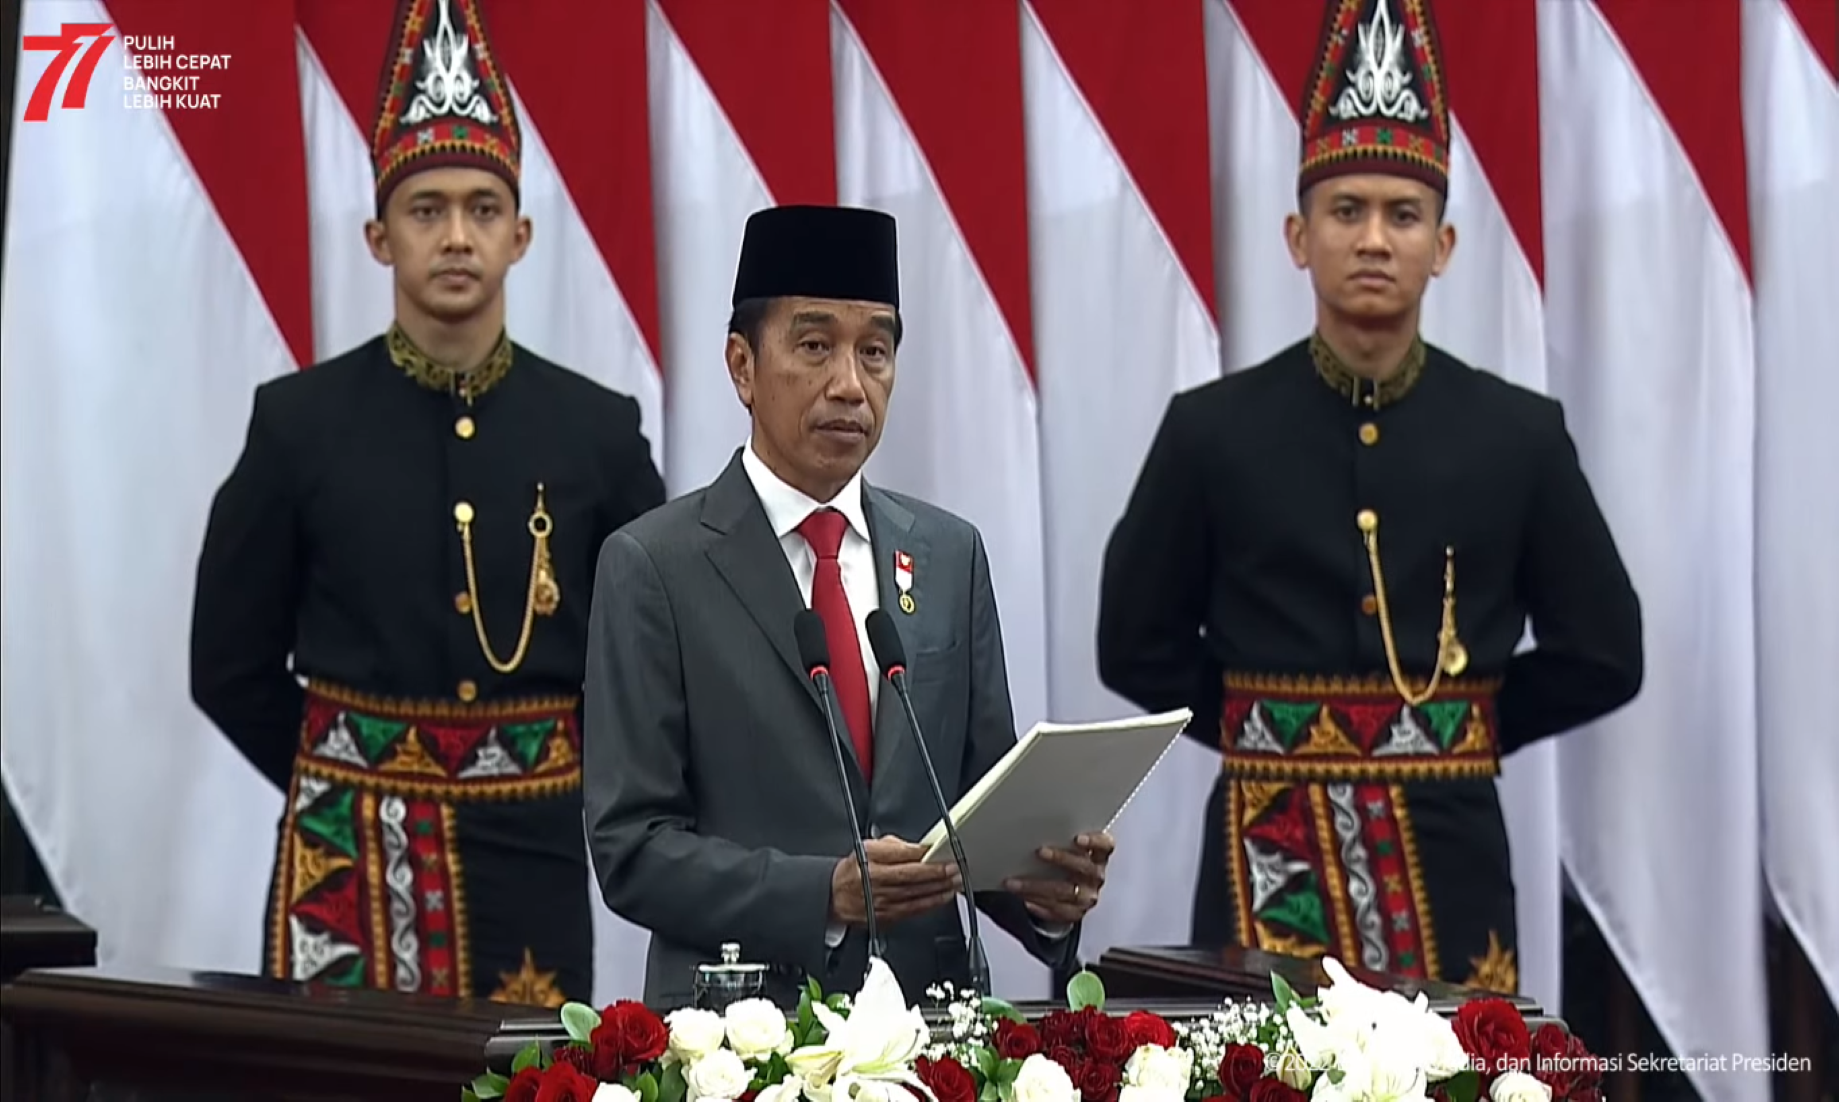 Indonesia to leverage demographic edge, global trust – Jokowi